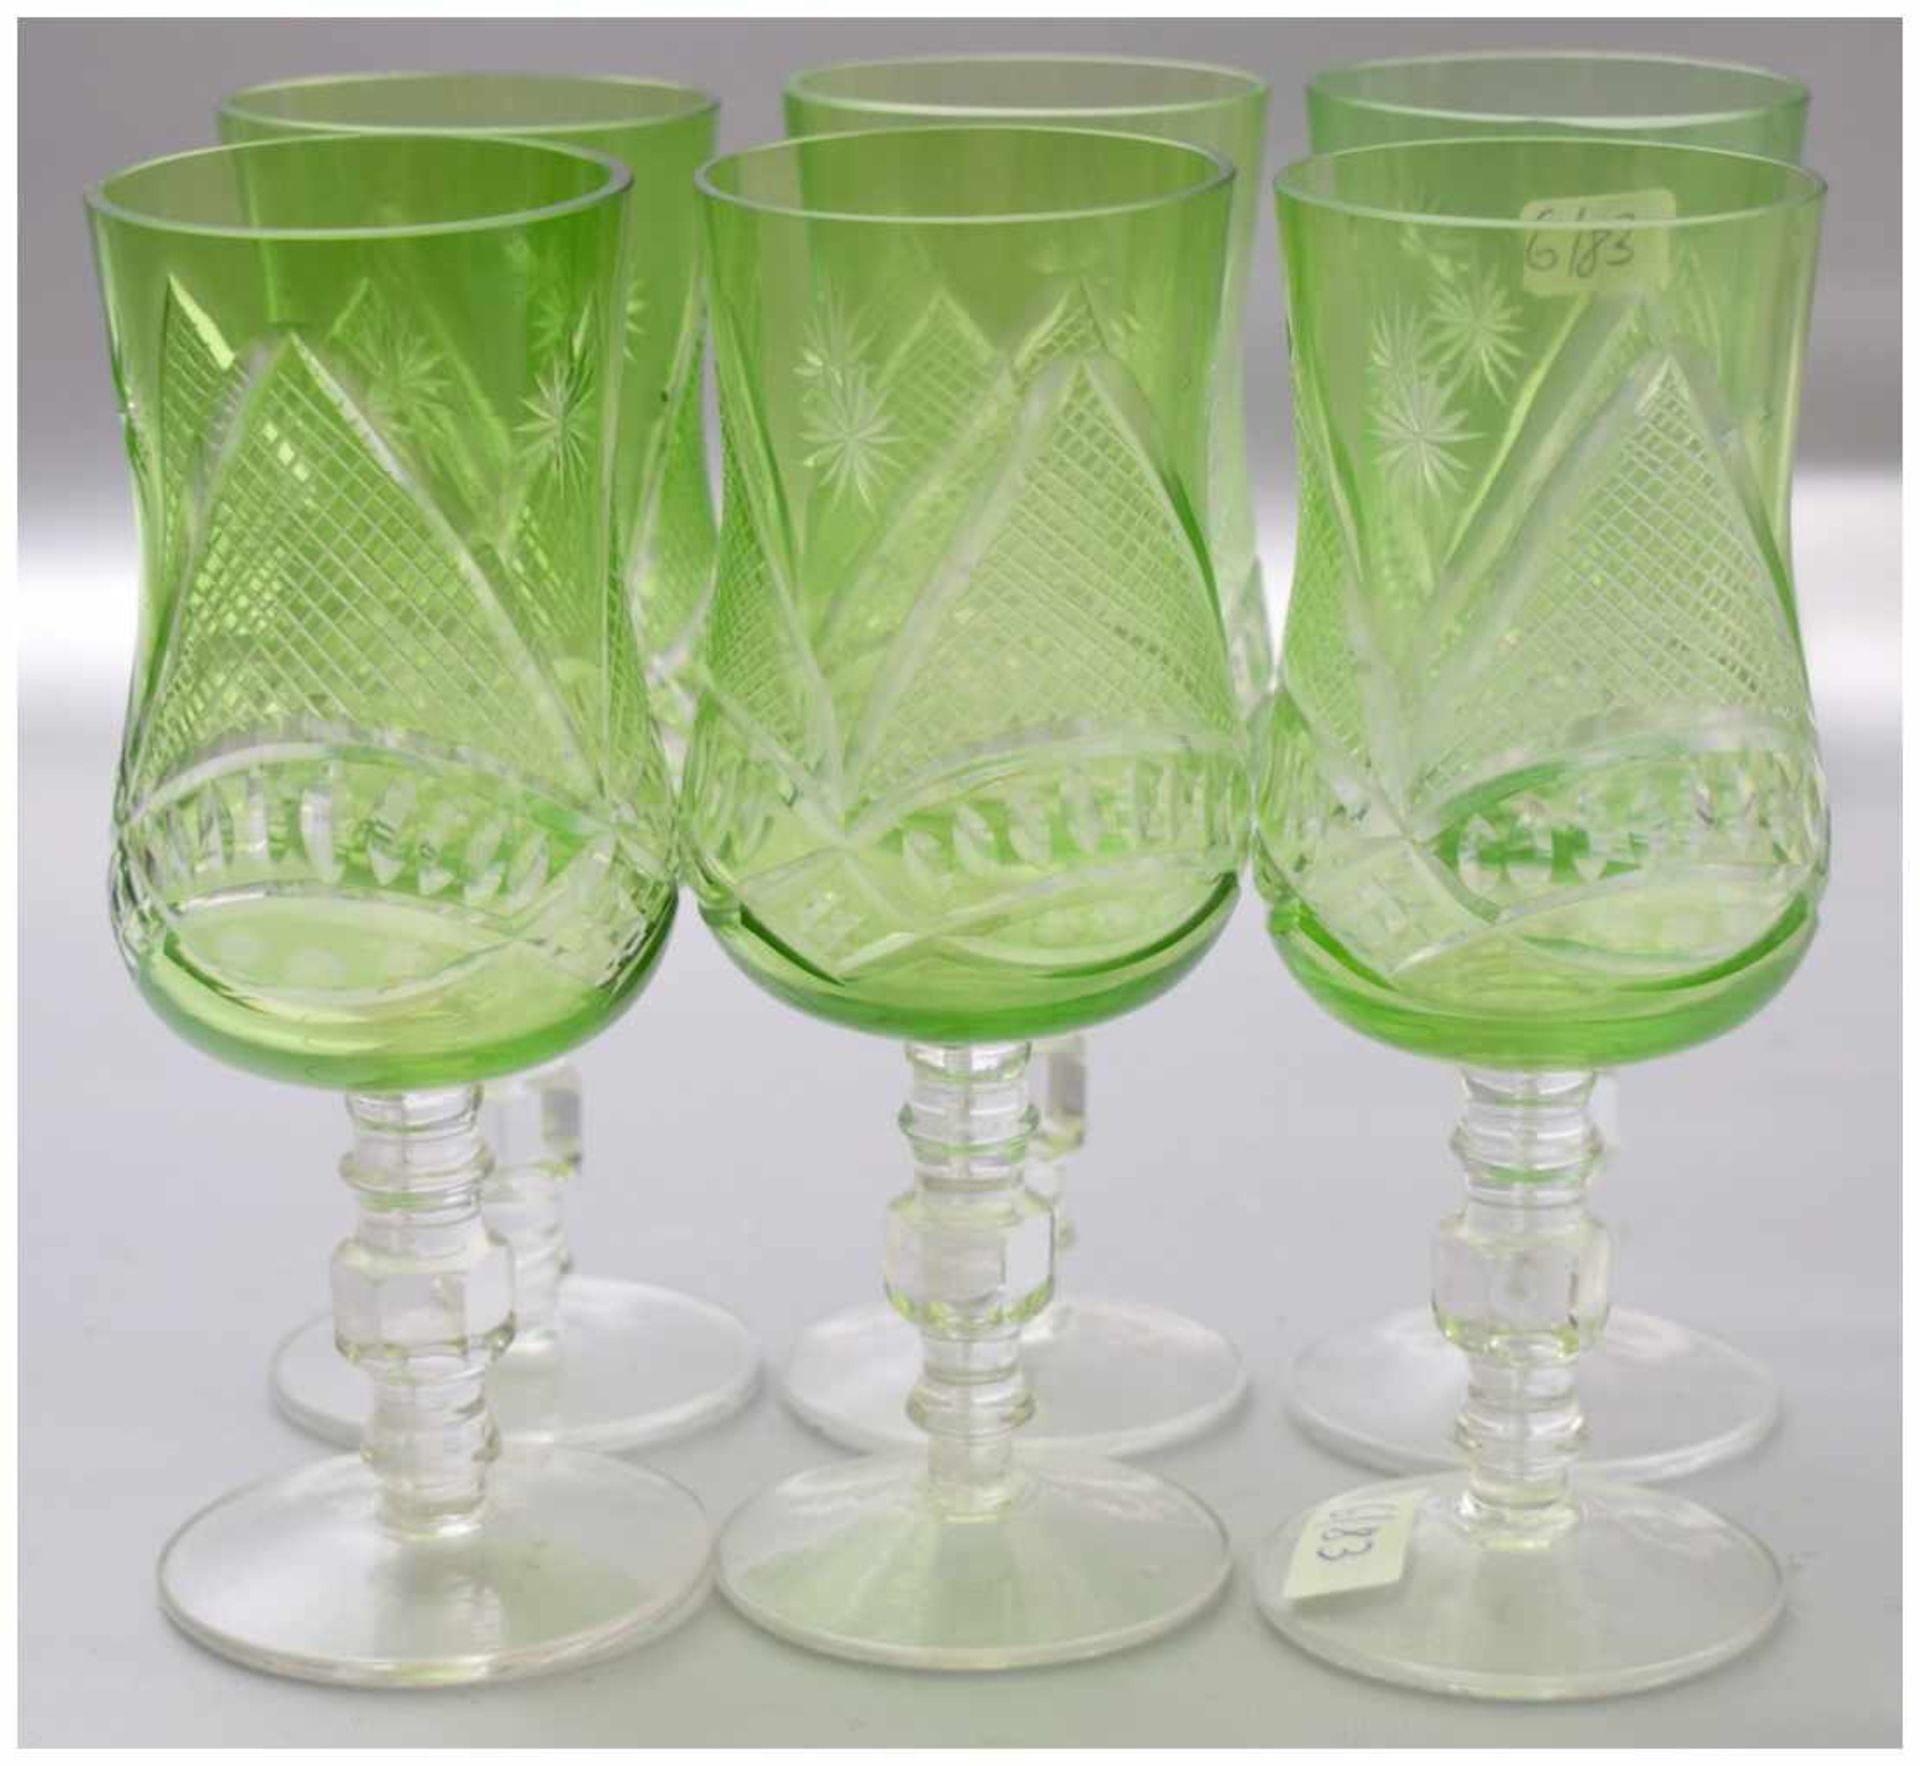 Sechs Weingläser farbl. Glas, geschliffen verziert, mit grünem Überfang, H 15 cm